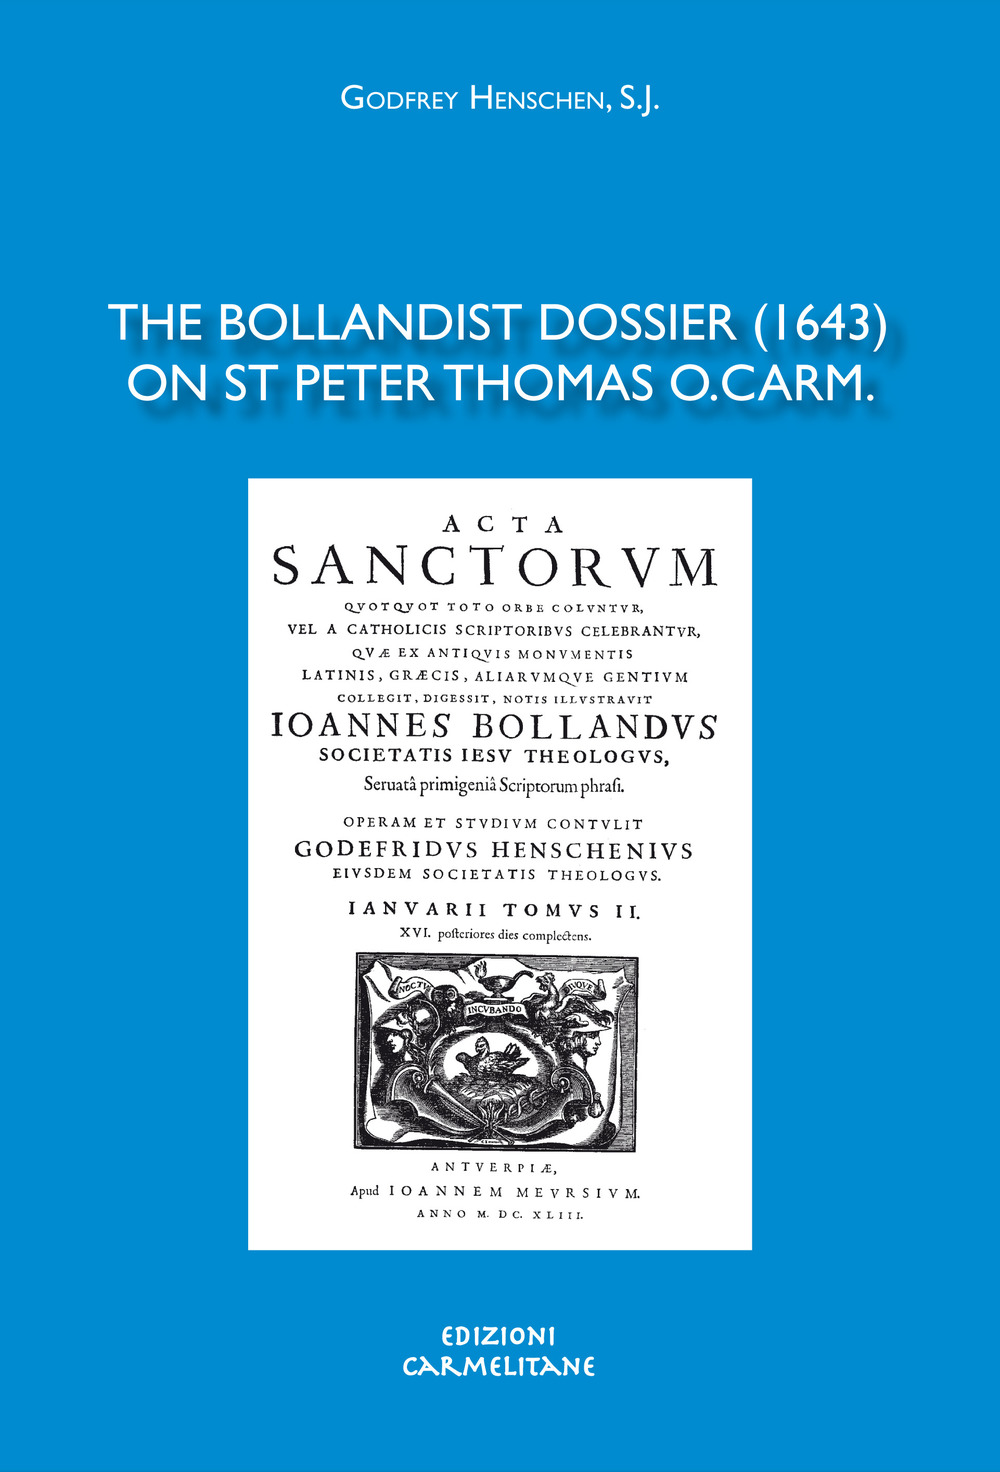 The Bollandist dossier (1643) on St Peter Thomas O. Carm.